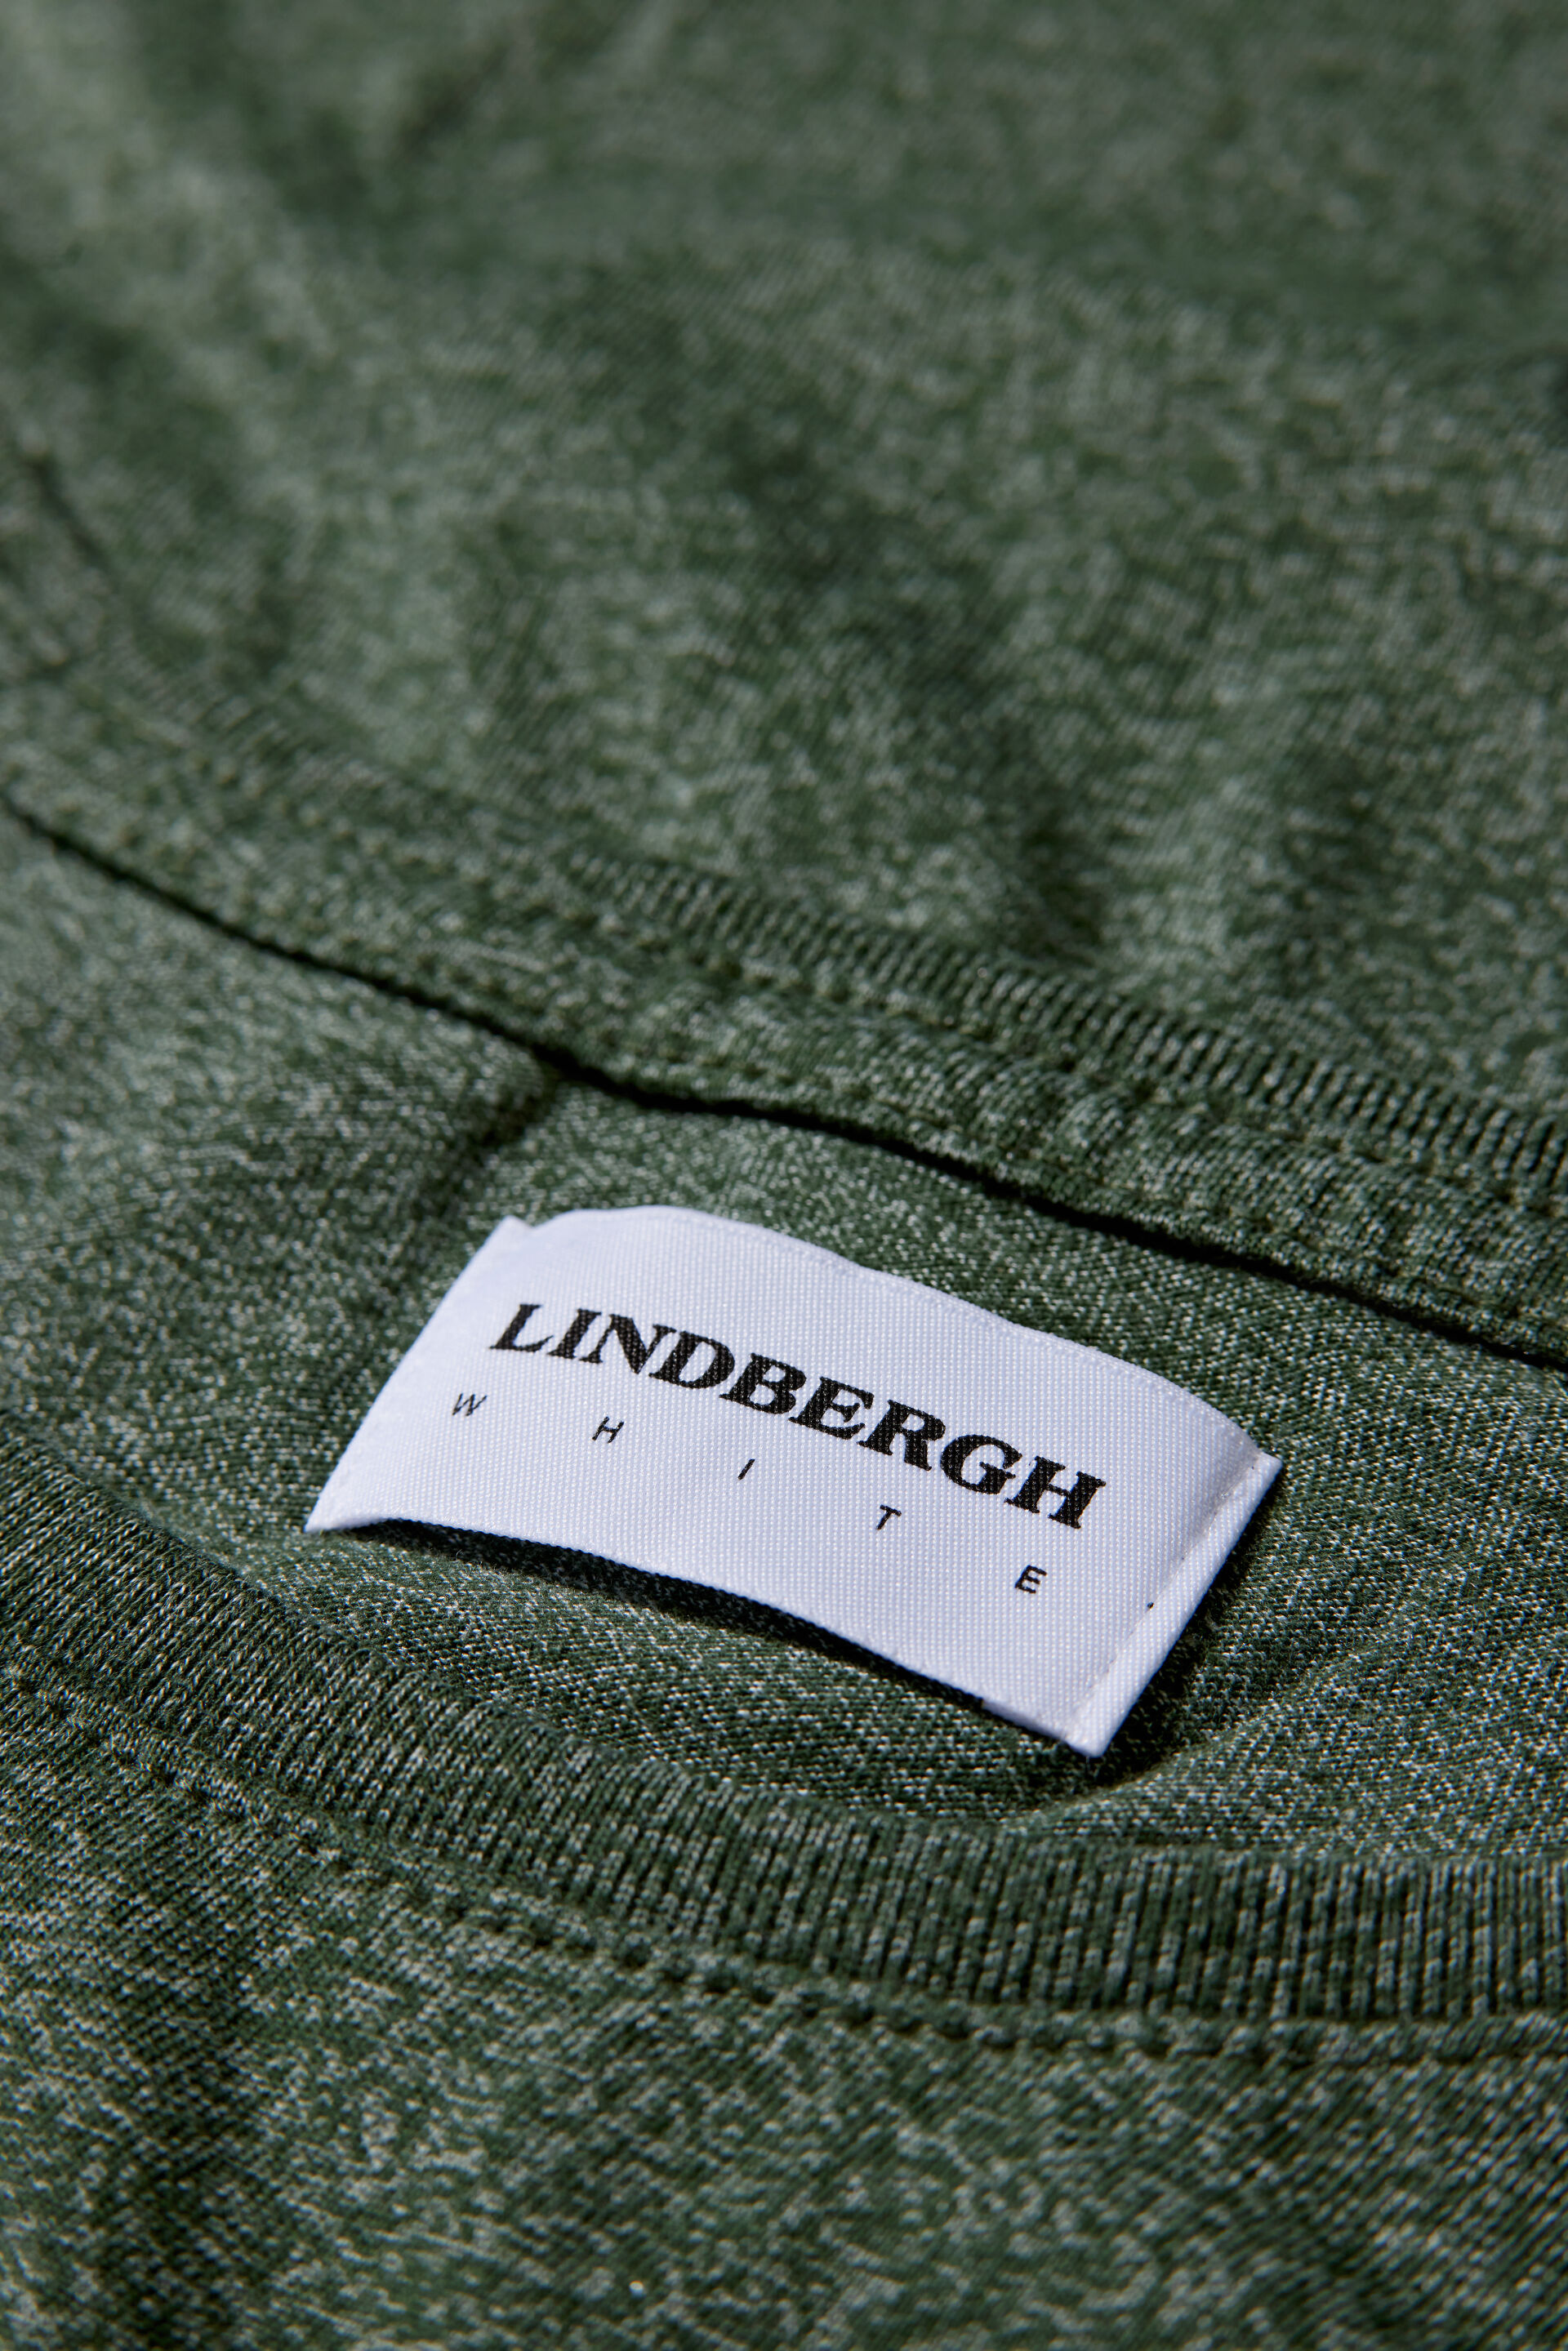 Lindbergh  30-48044